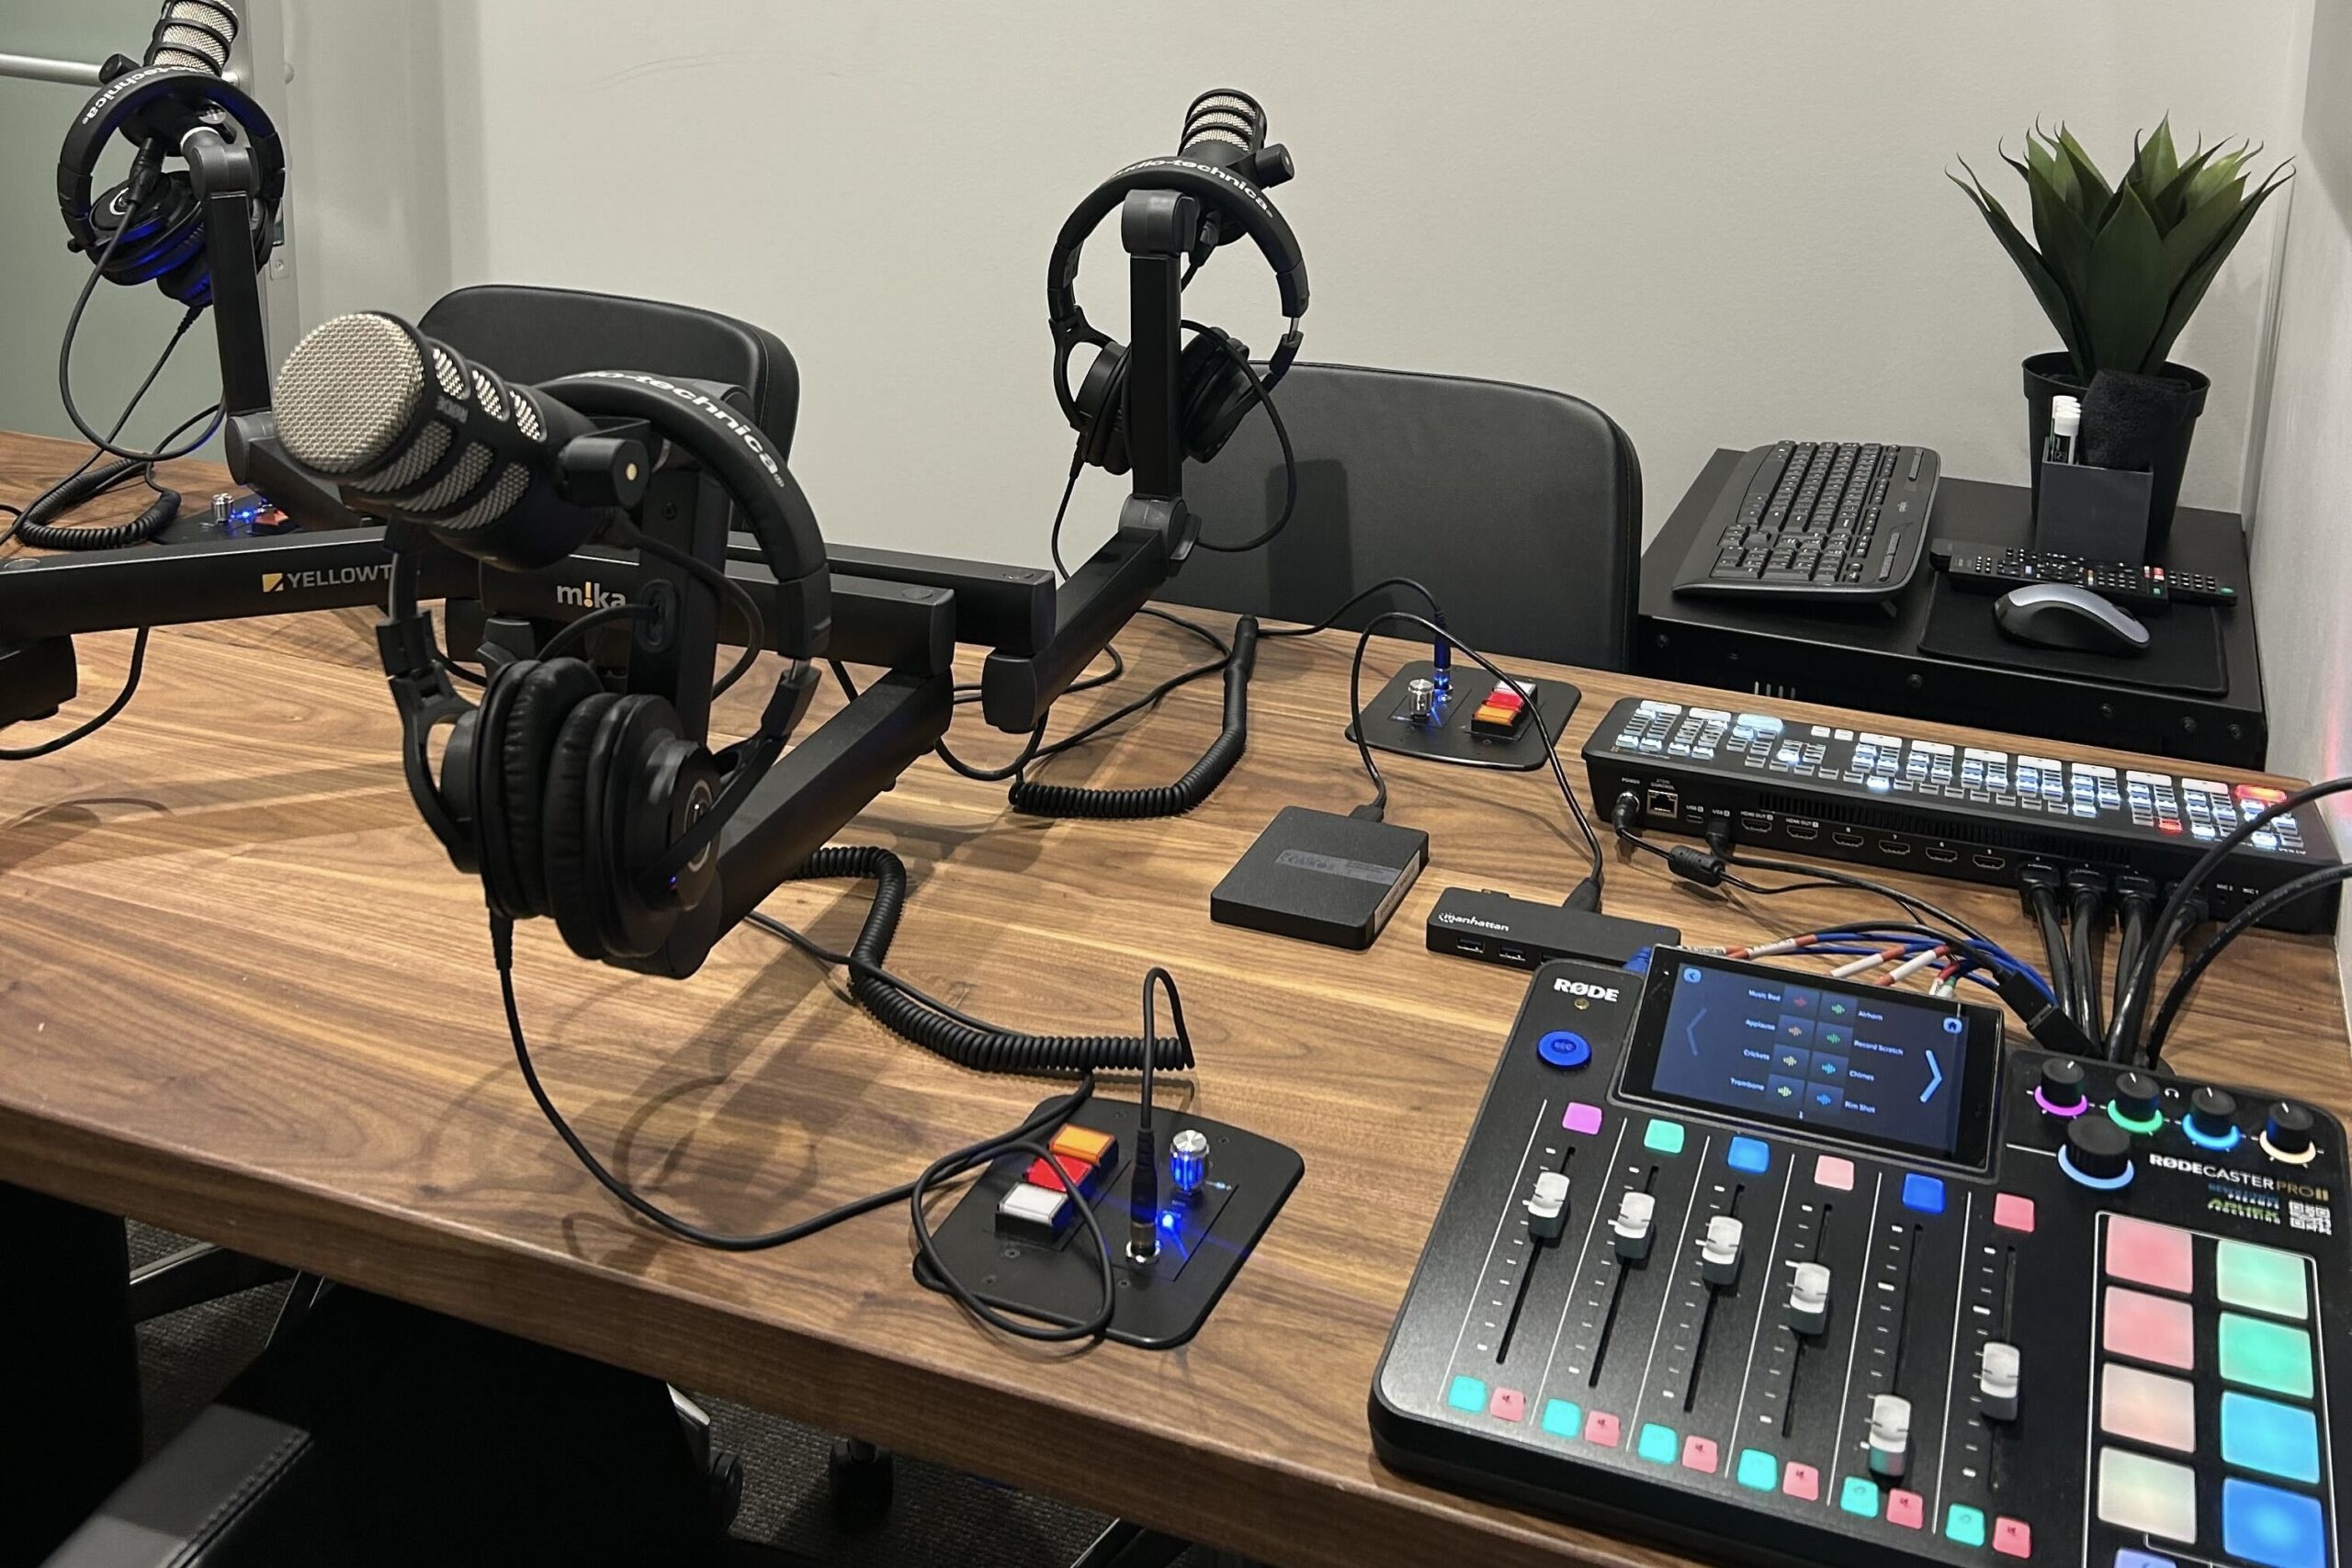 Podcast studio and equipment - Roam Grandscape